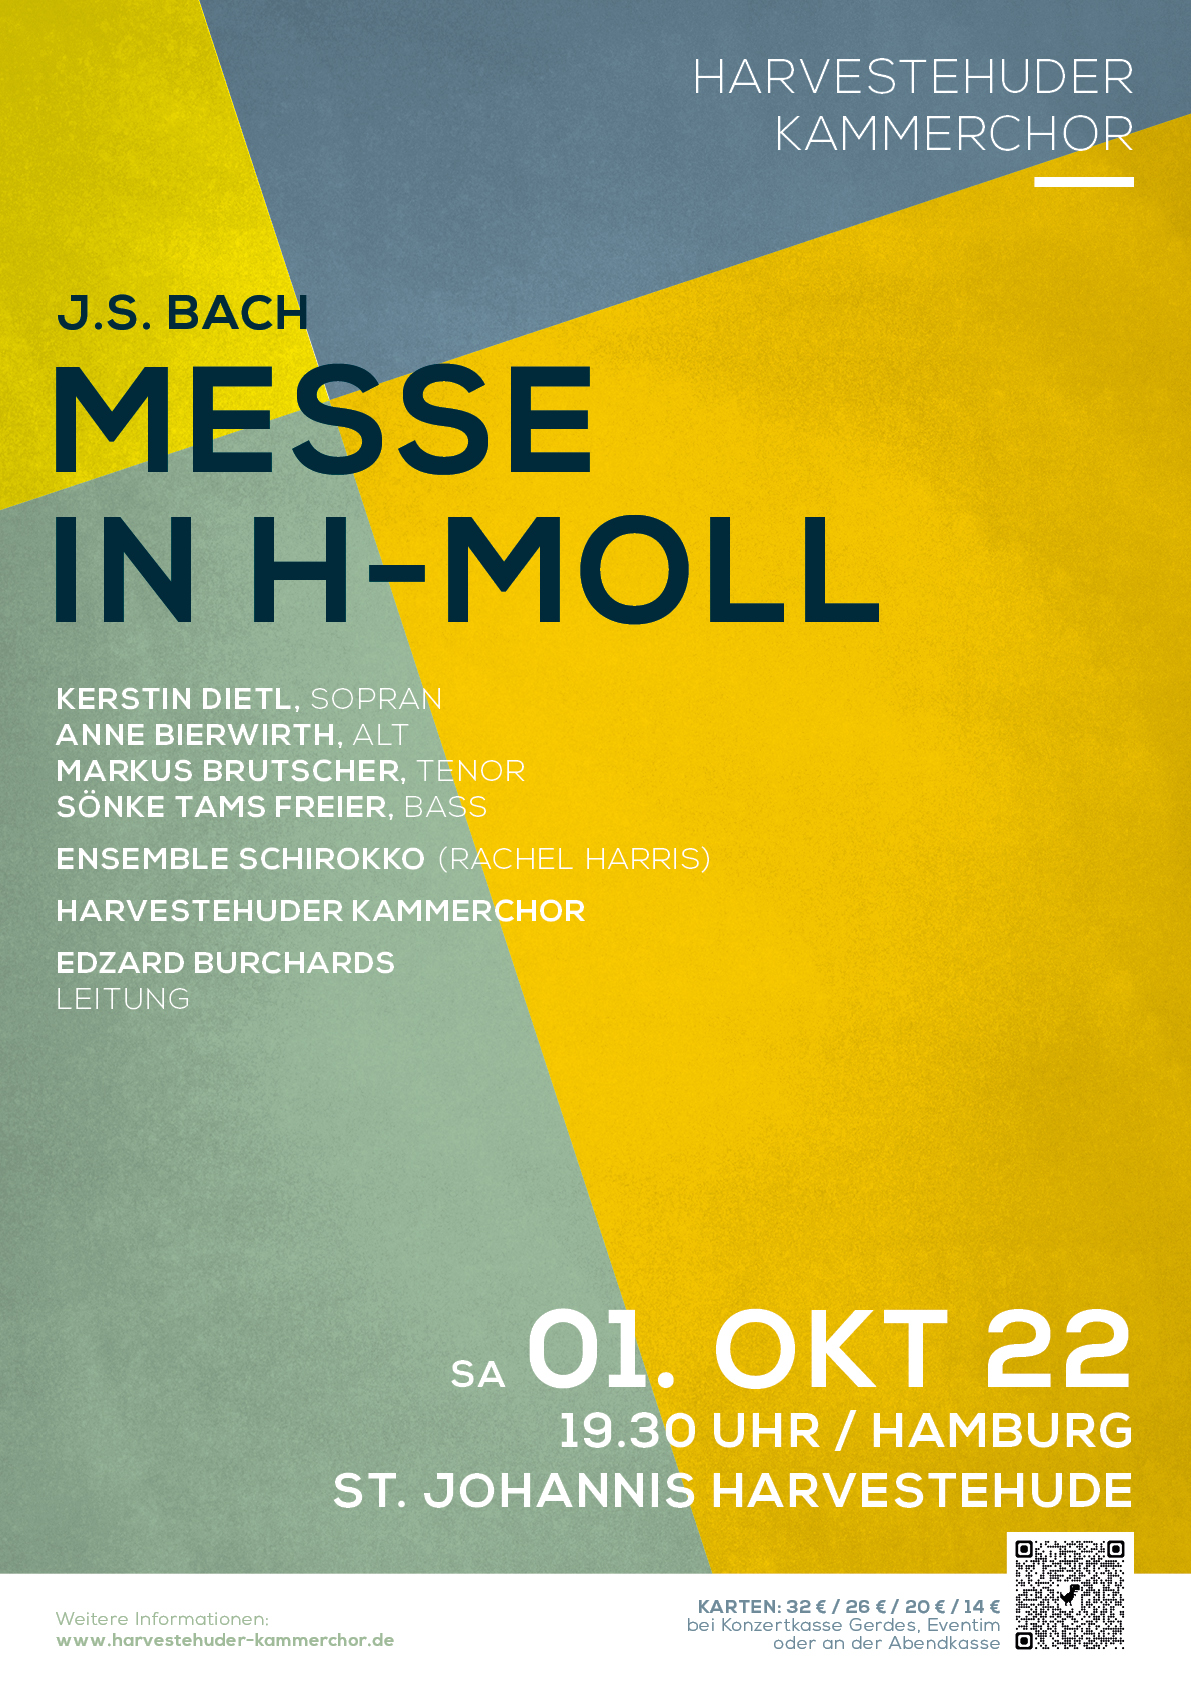 h-Moll Messe